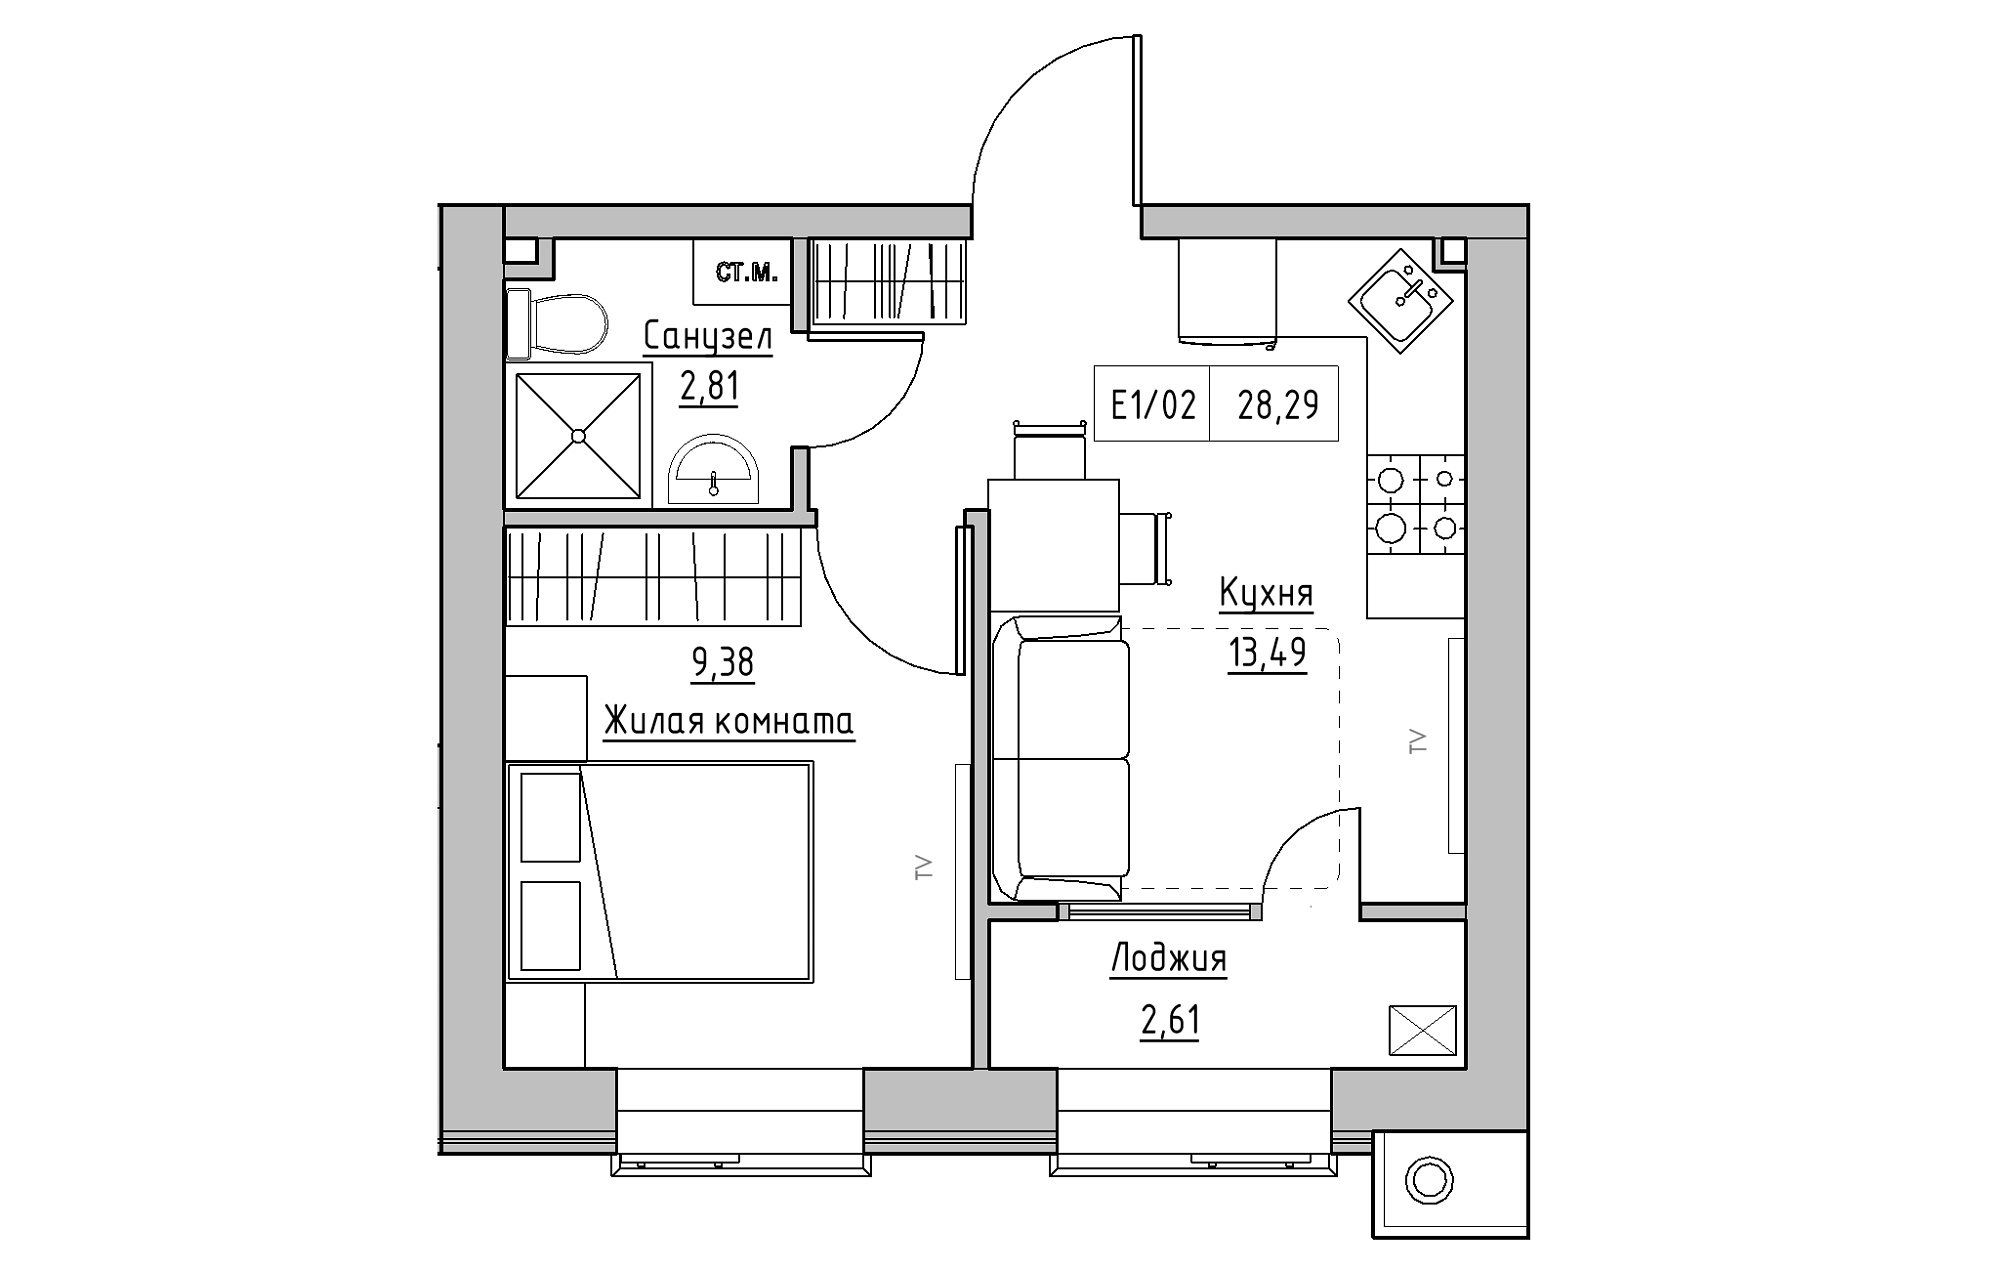 Planning 1-rm flats area 28.29m2, KS-013-01/0013.